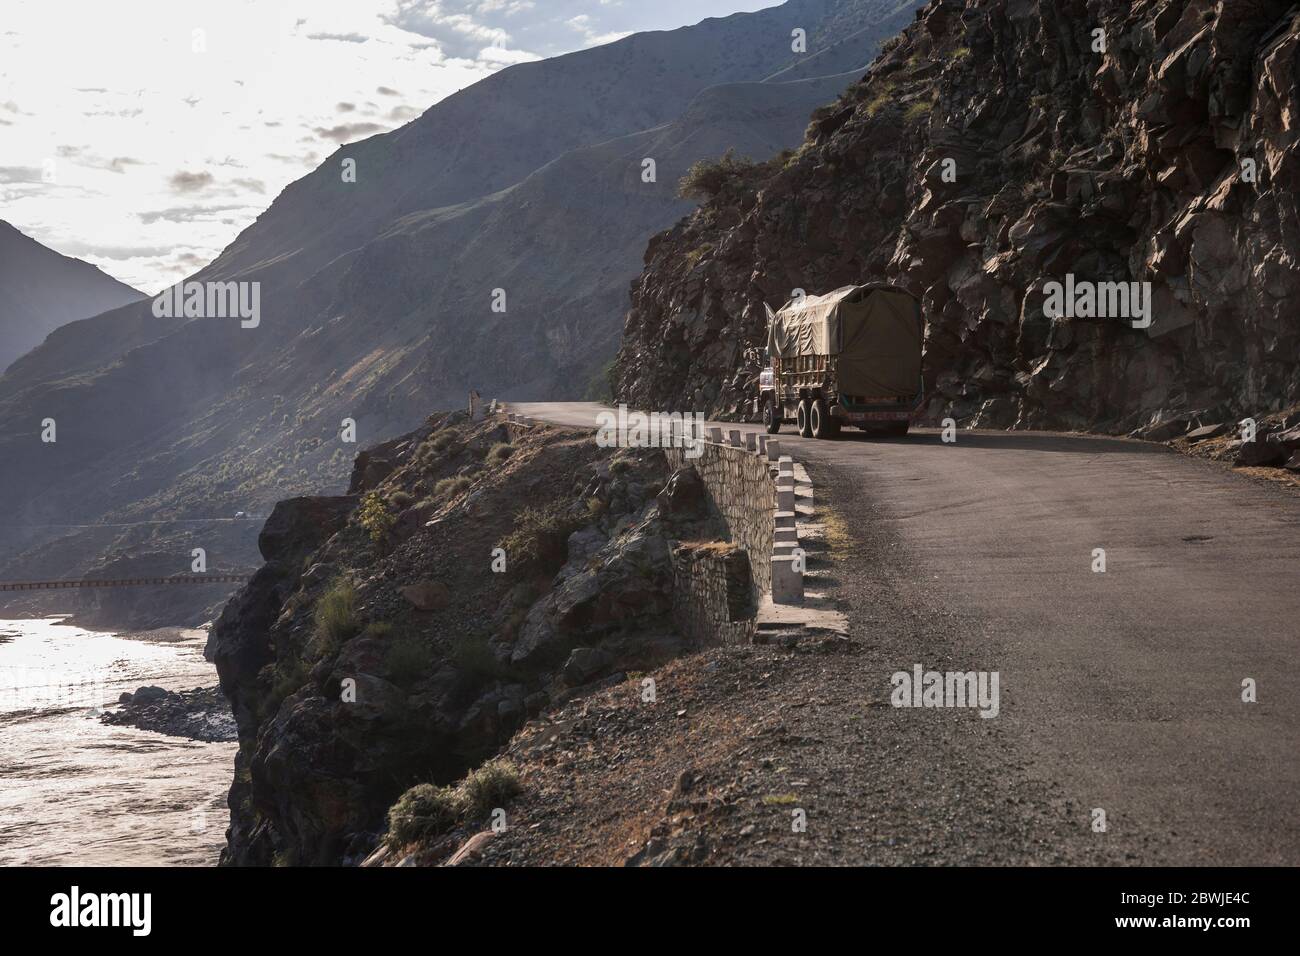 Karakoram Highway and Indus river, Indus valley, Karakoram mountain, Gilgit-Baltistan Province, Northern Areas, Pakistan, South Asia, Asia Stock Photo